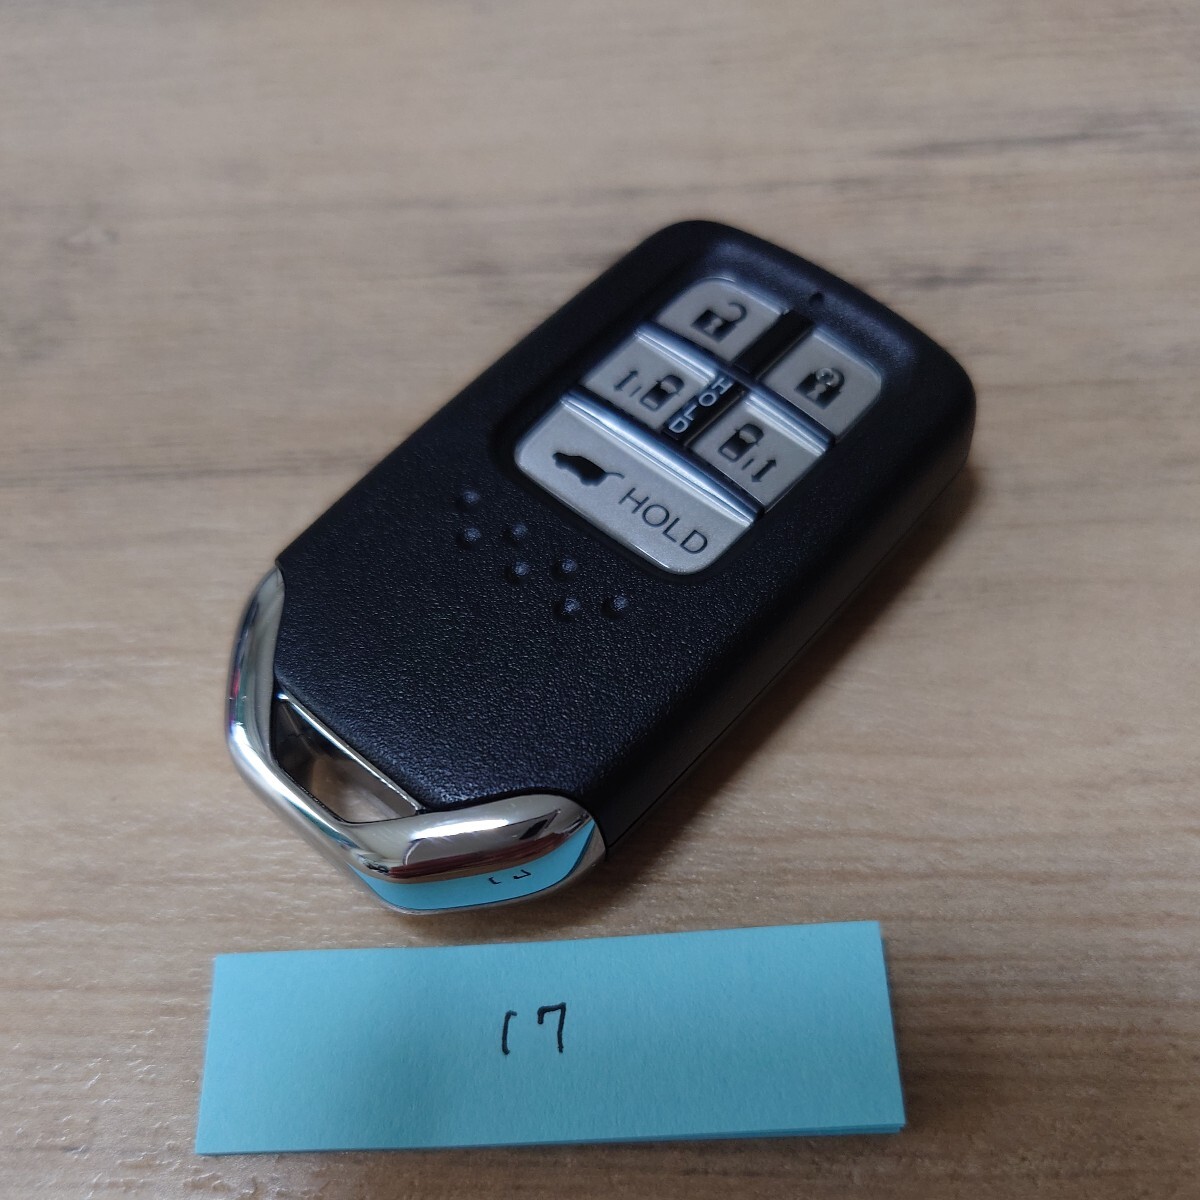  free shipping Honda Odyssey smart key power back door 5 button 72147-T6A-J31 (17)